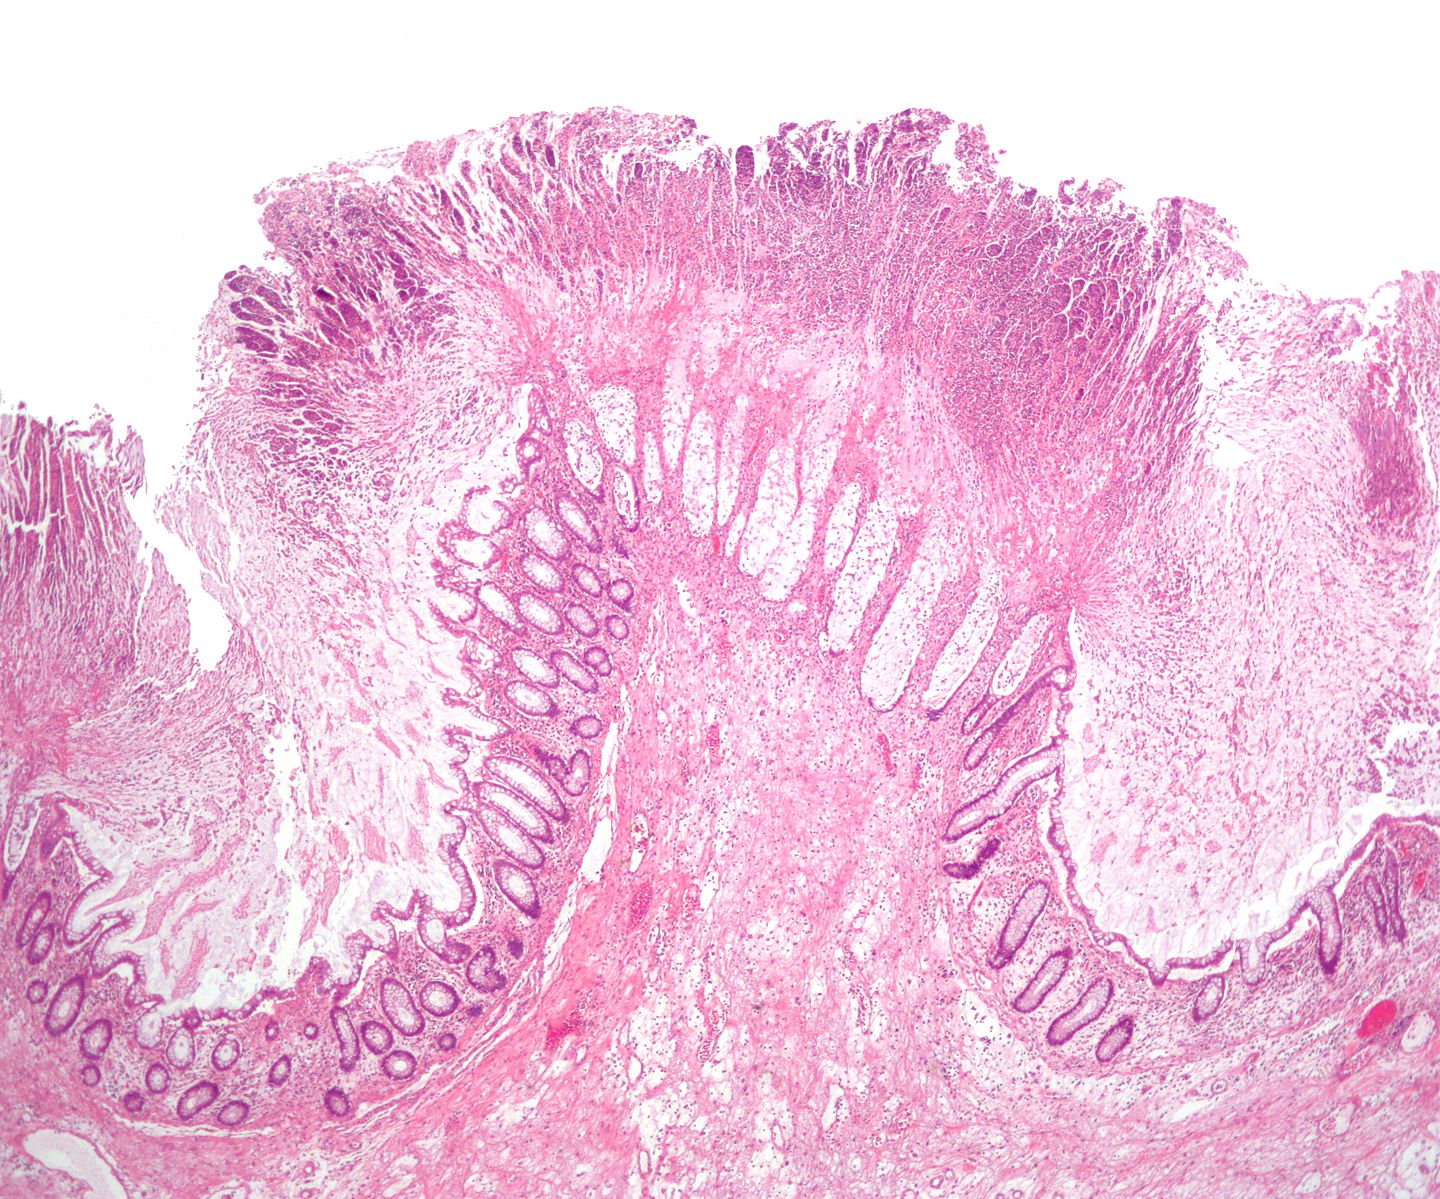 Pseudomembranous colitis. H& E staining showing pseudomembranes in Clostridium colitis [8]